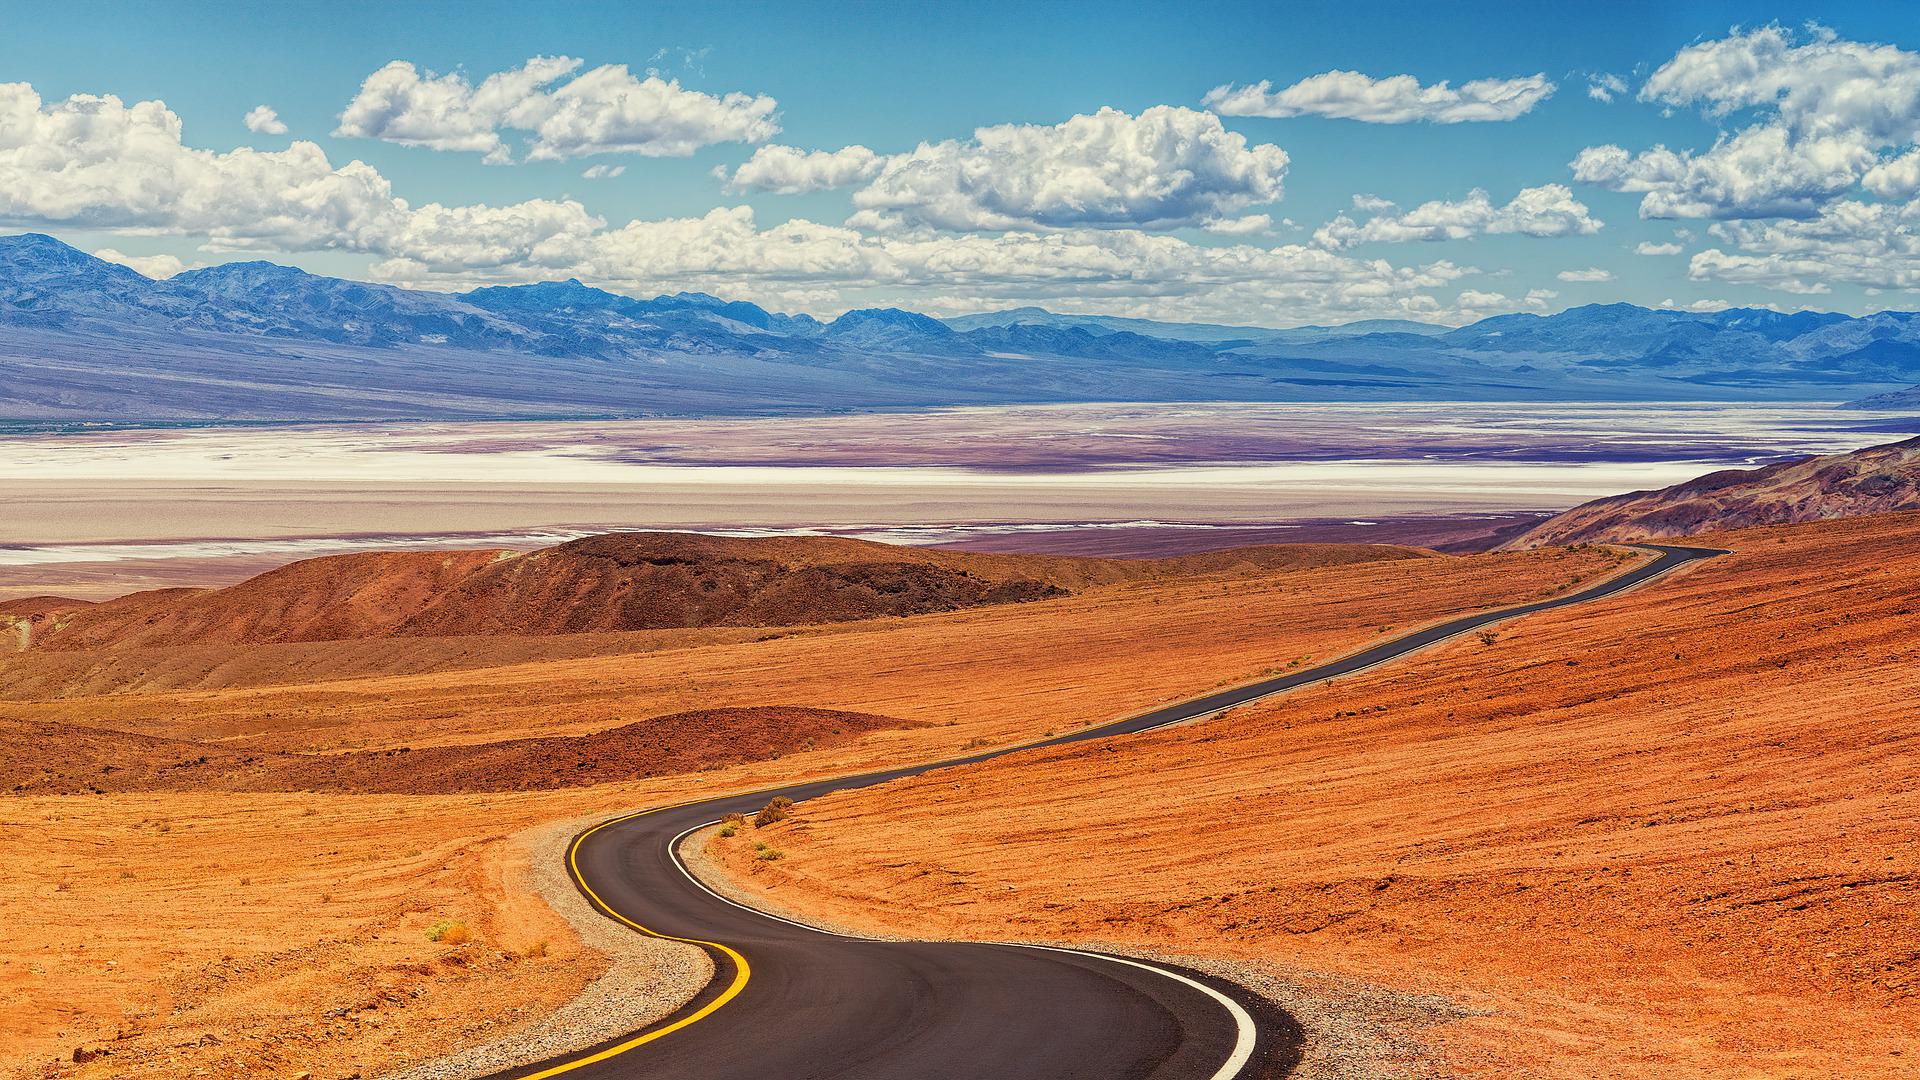 General 1920x1080 Death Valley road clouds mountains orange blue white rocks far view